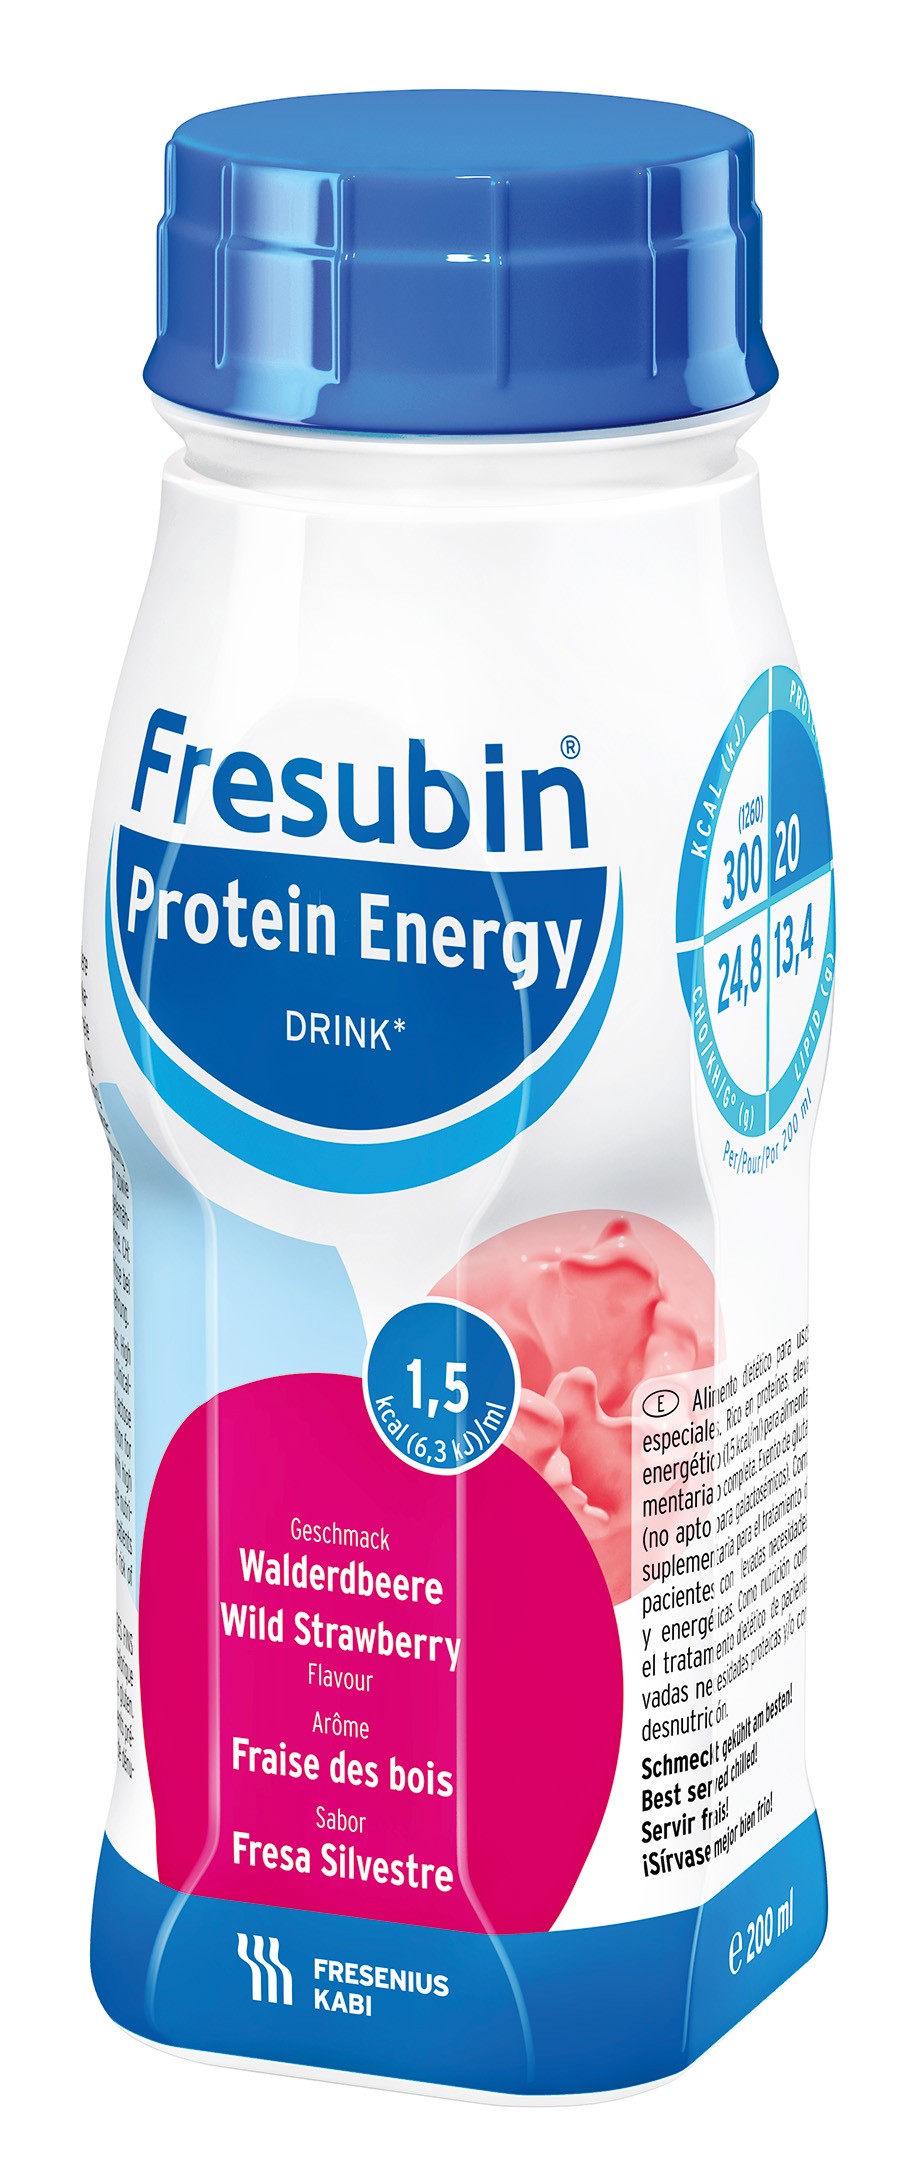 Afectiuni digestive - FRESUBIN PROTEIN ENERGY DRINK FRAGI 200ML CTX4 FL
, nordpharm.ro